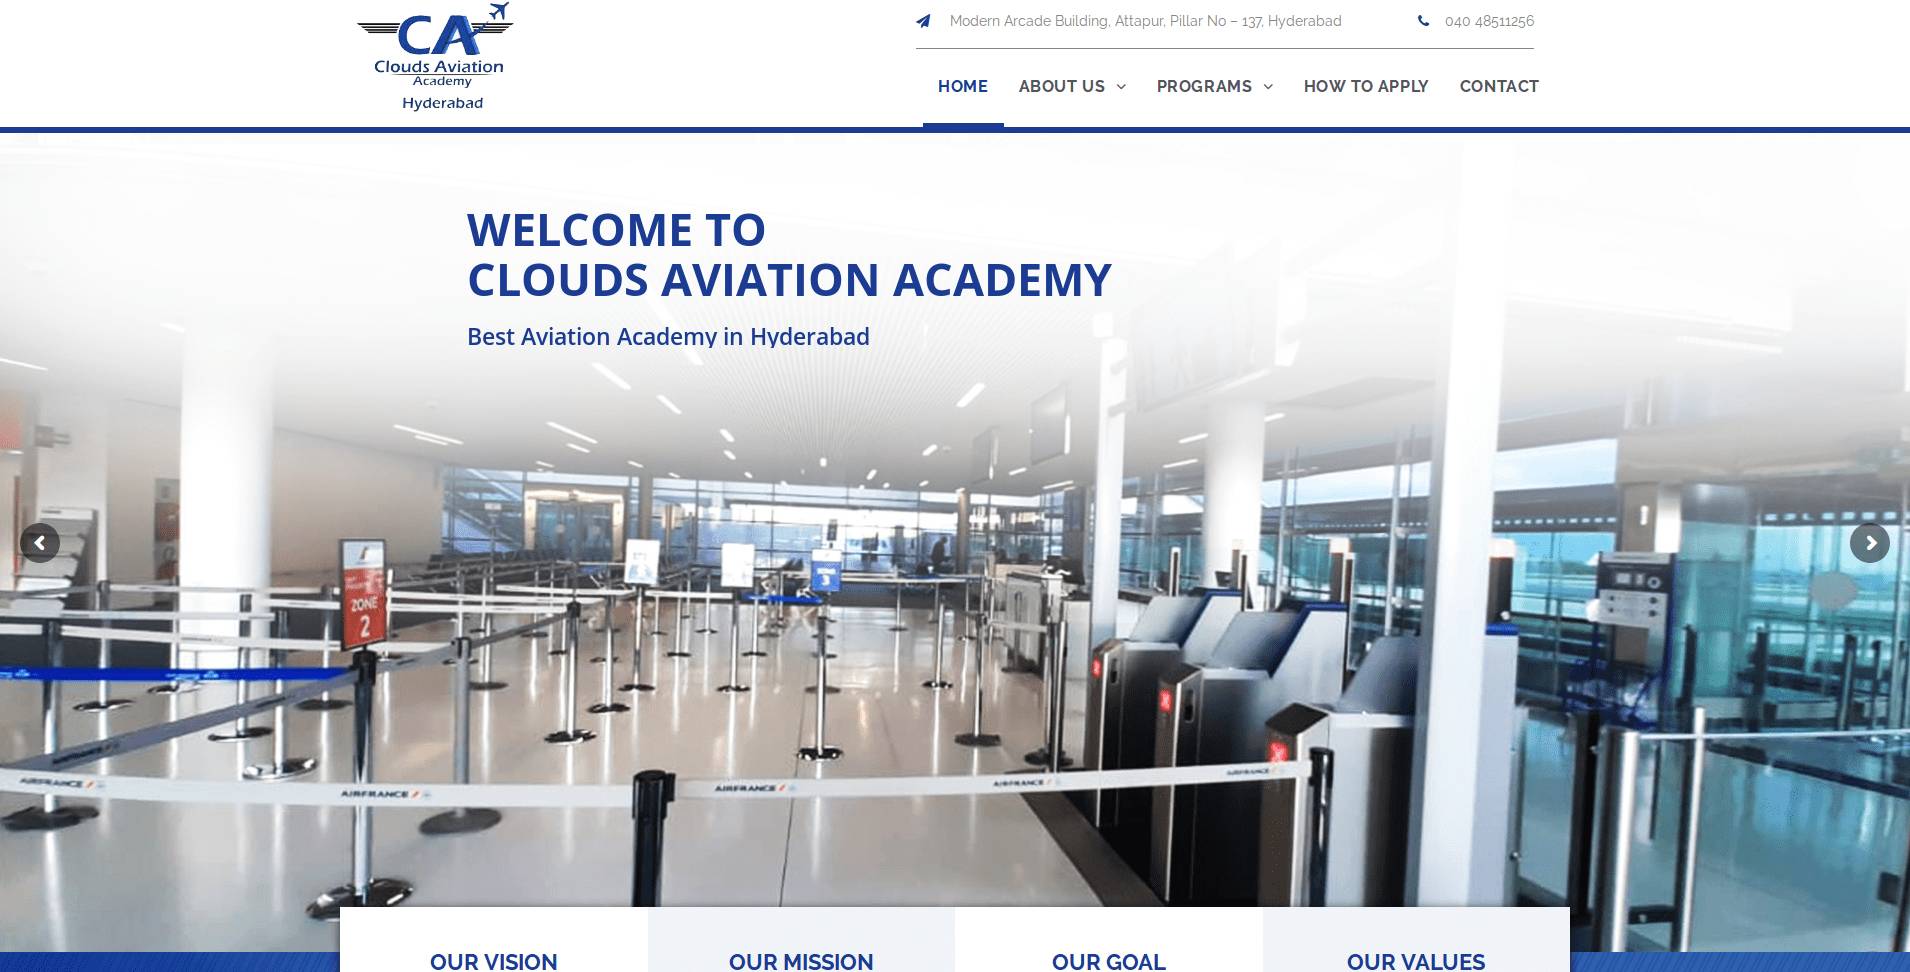 Clouds Aviation Academy